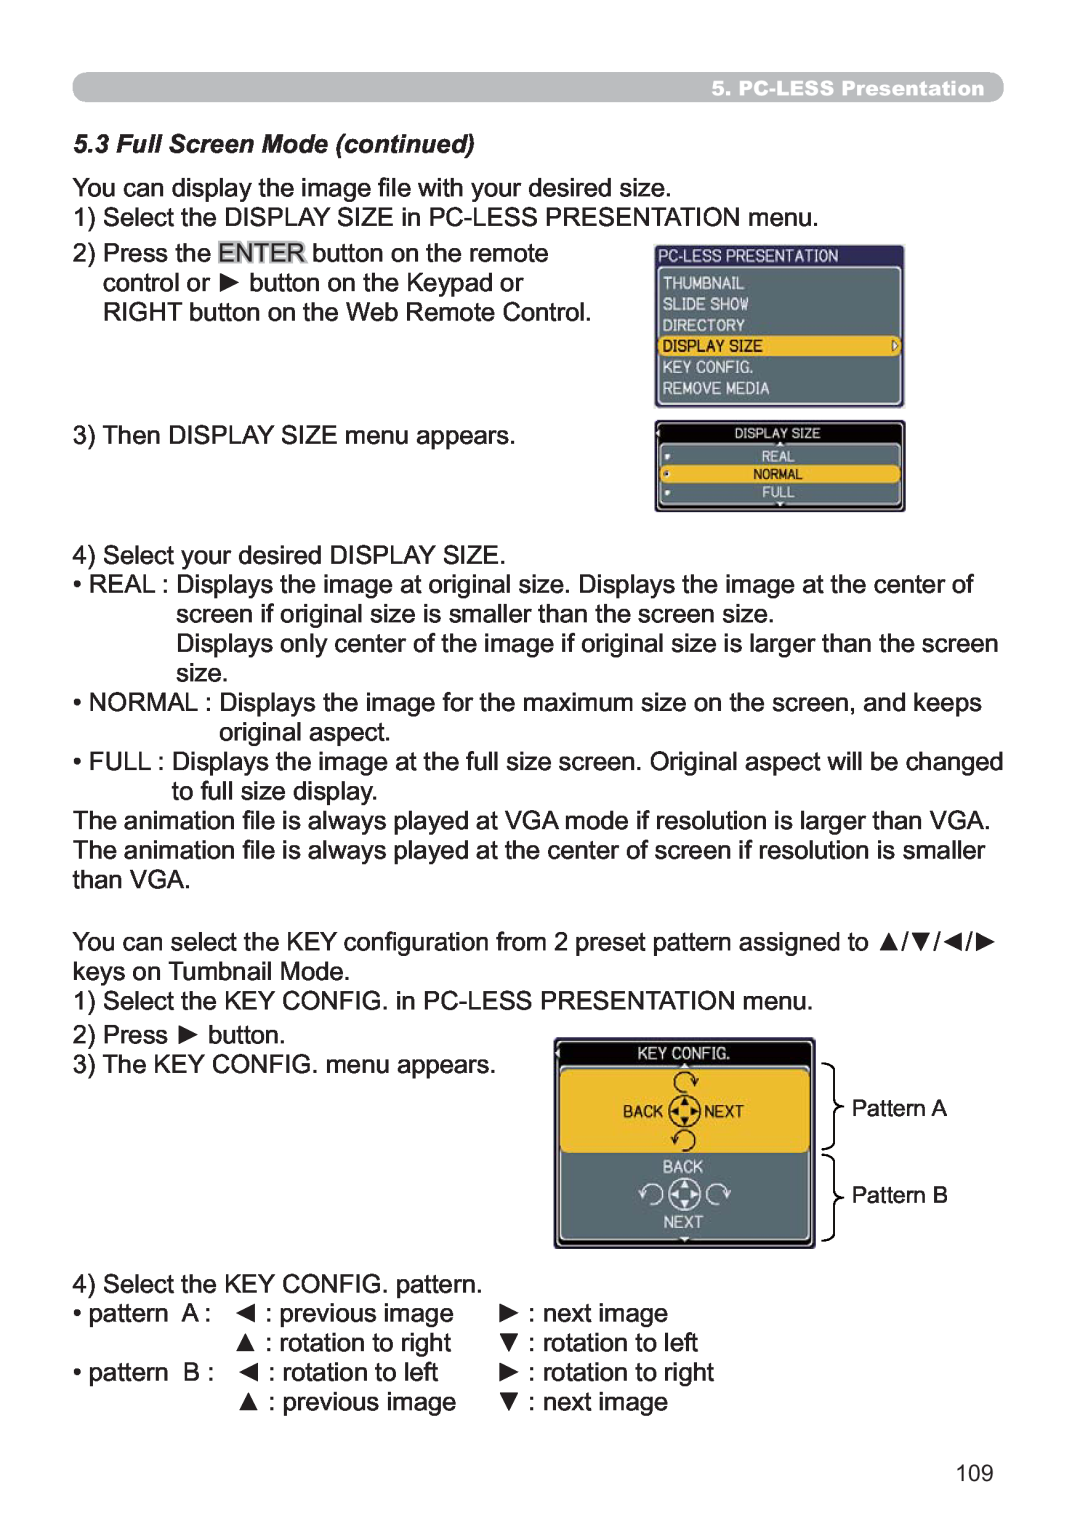 Hitachi CP-X809W user manual Full Screen Mode continued, 7KHQ,63/$6,=PHQXDSSHDUV 6HOHFW\RXUGHVLUHG,63/$6,= 